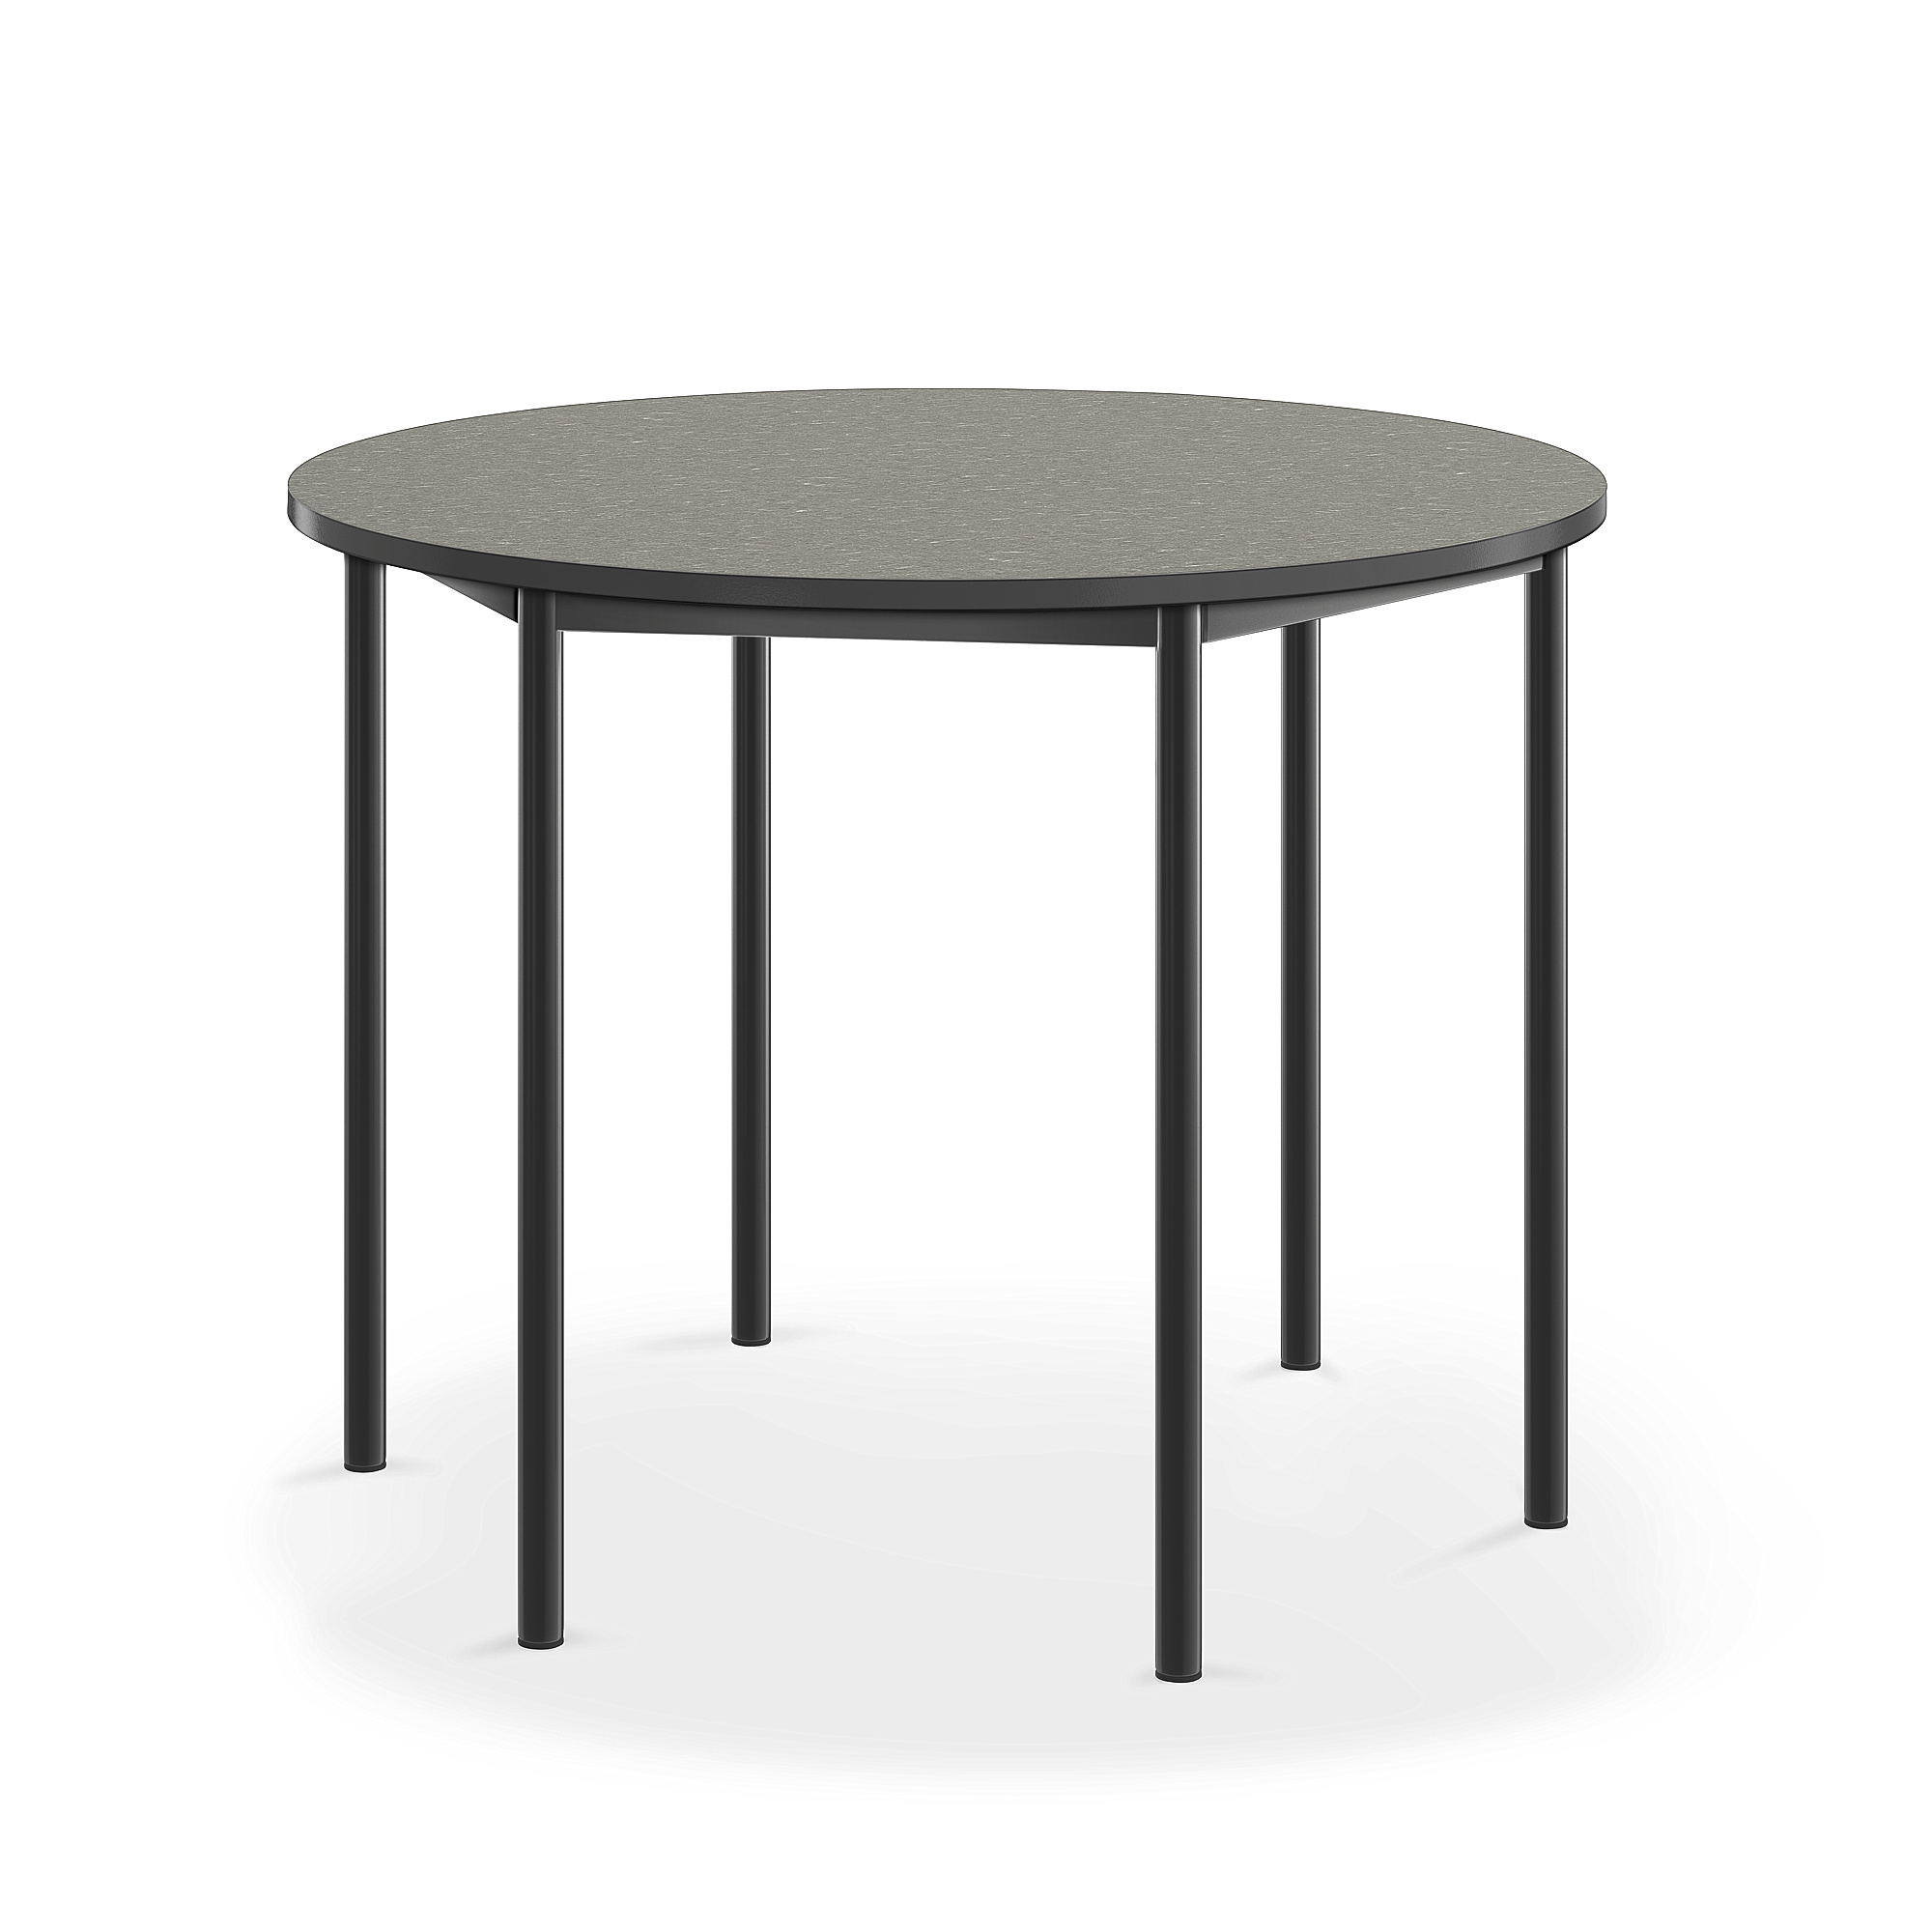 Stůl SONITUS, Ø1200x900 mm, antracitově šedé nohy, deska s linoleem, tmavě šedá